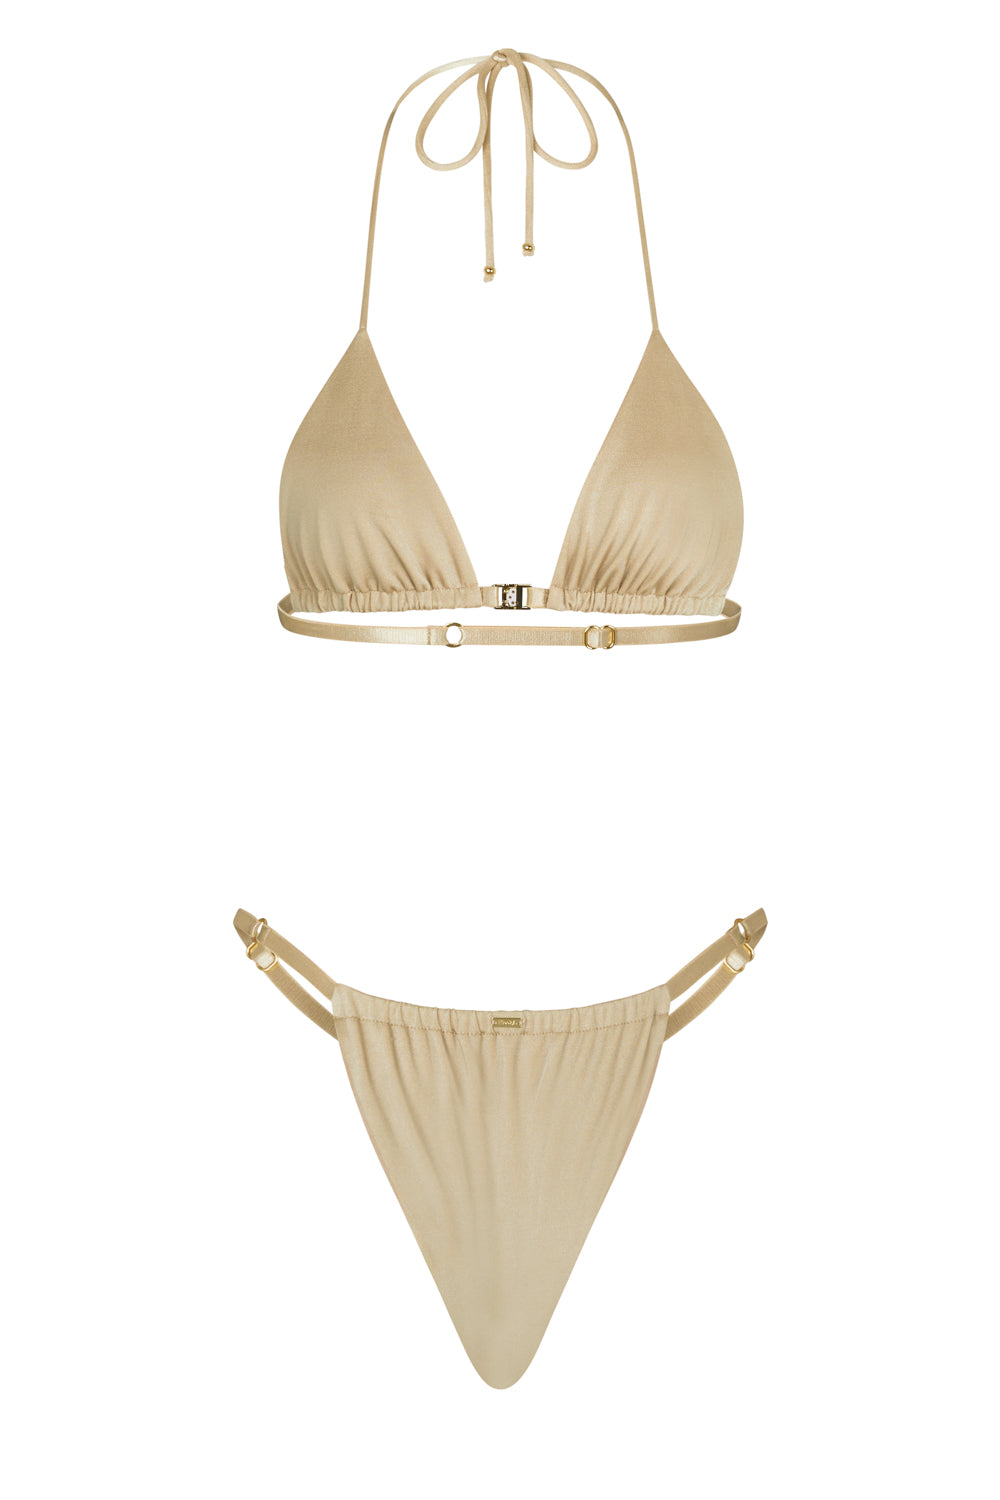 flook the label amari bralette top lillia brief swimwear gold product image back